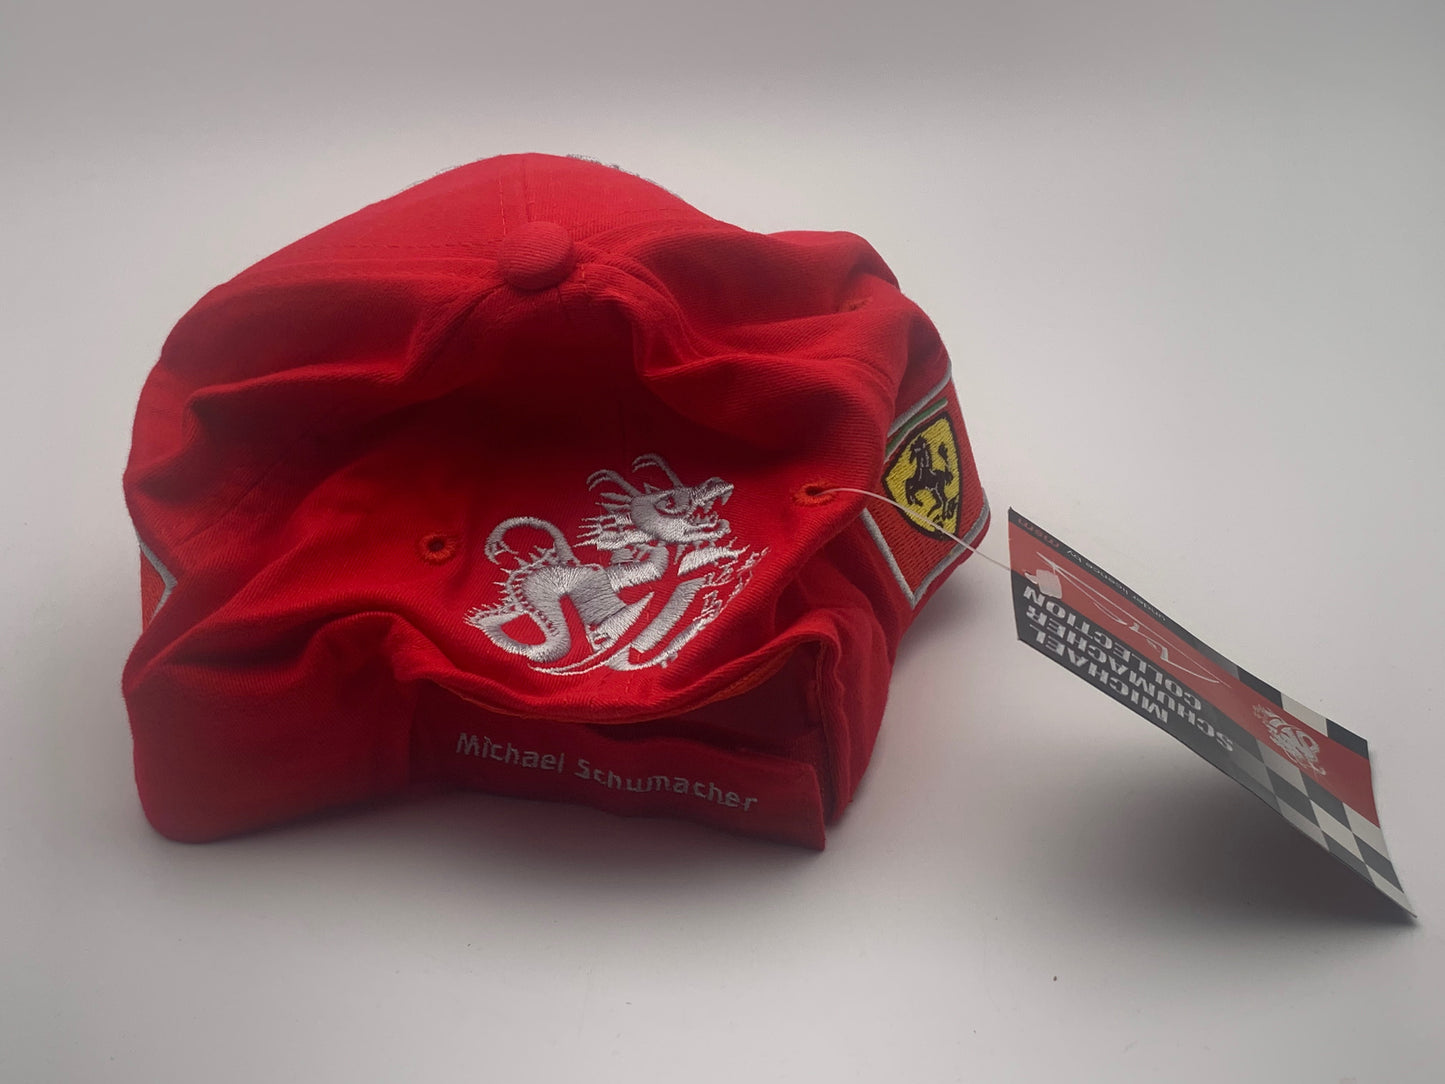 F1 World Championship Hat - Signed by Michael Schumacher